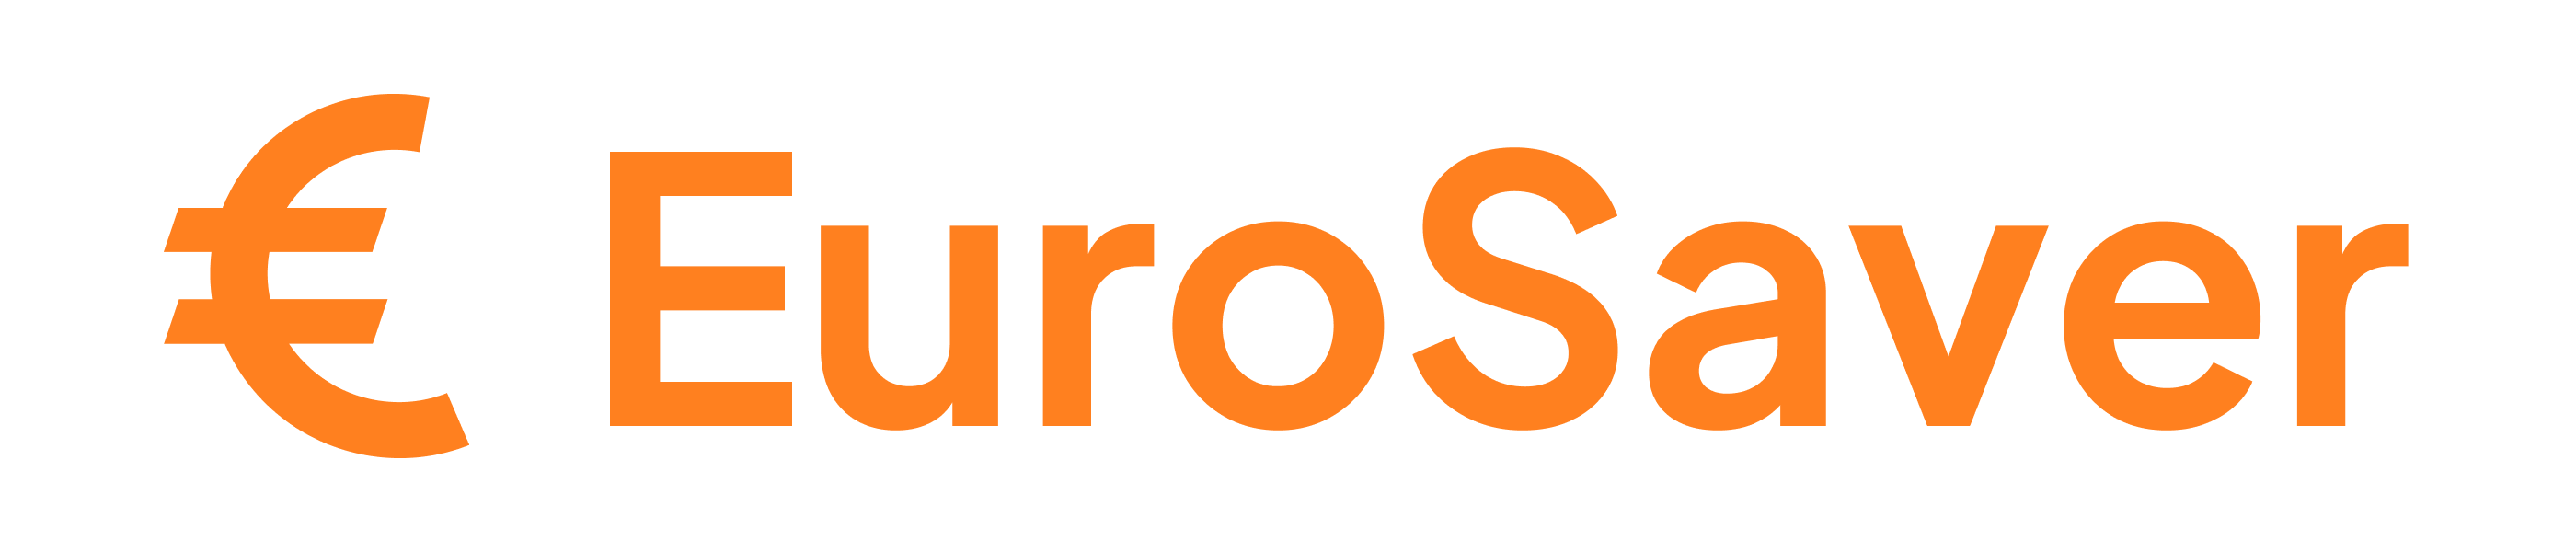 EuroSaver Logo